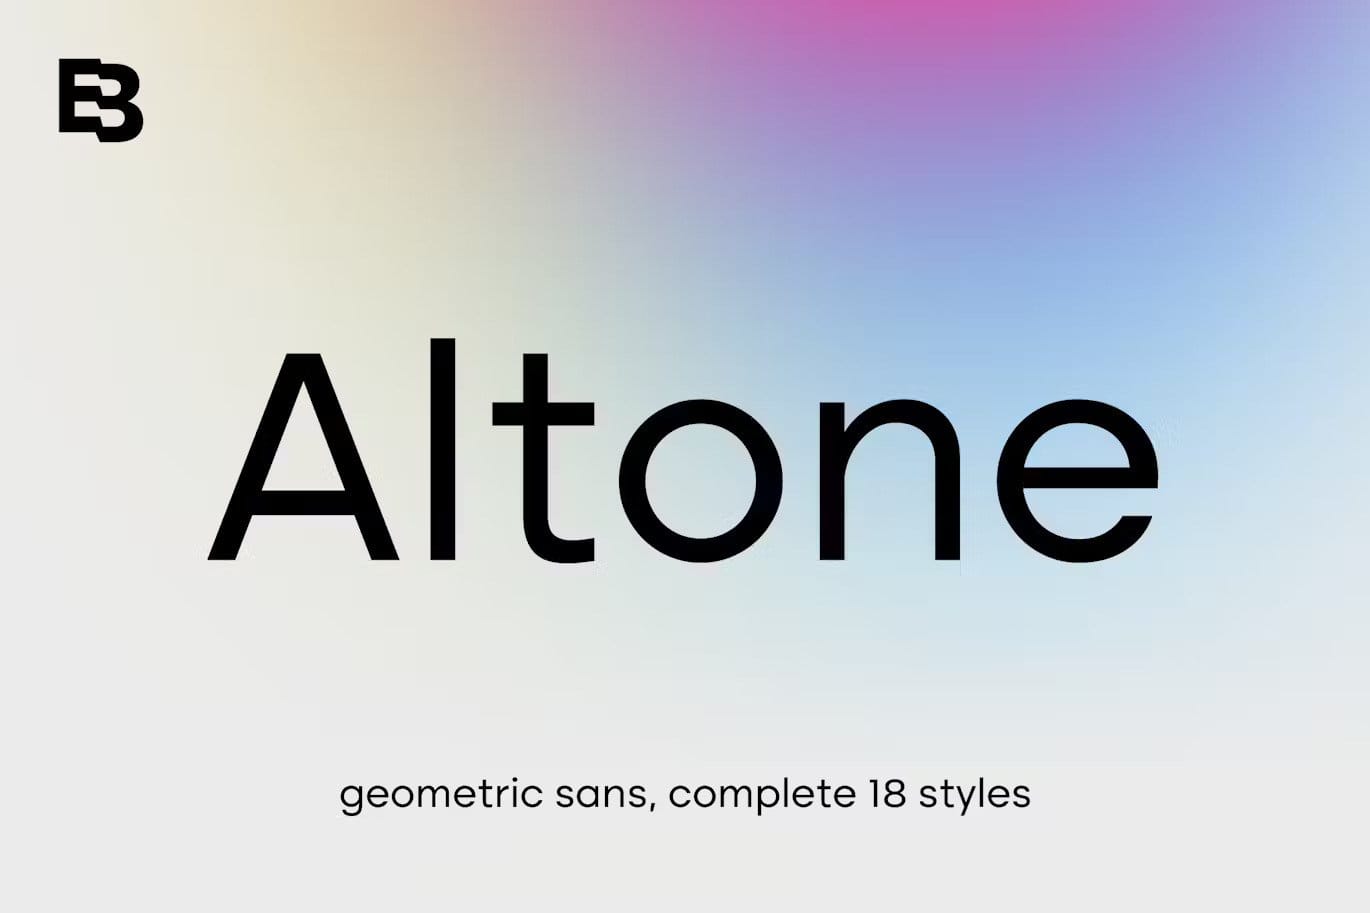 A geometric sans serif font in eighteen styles